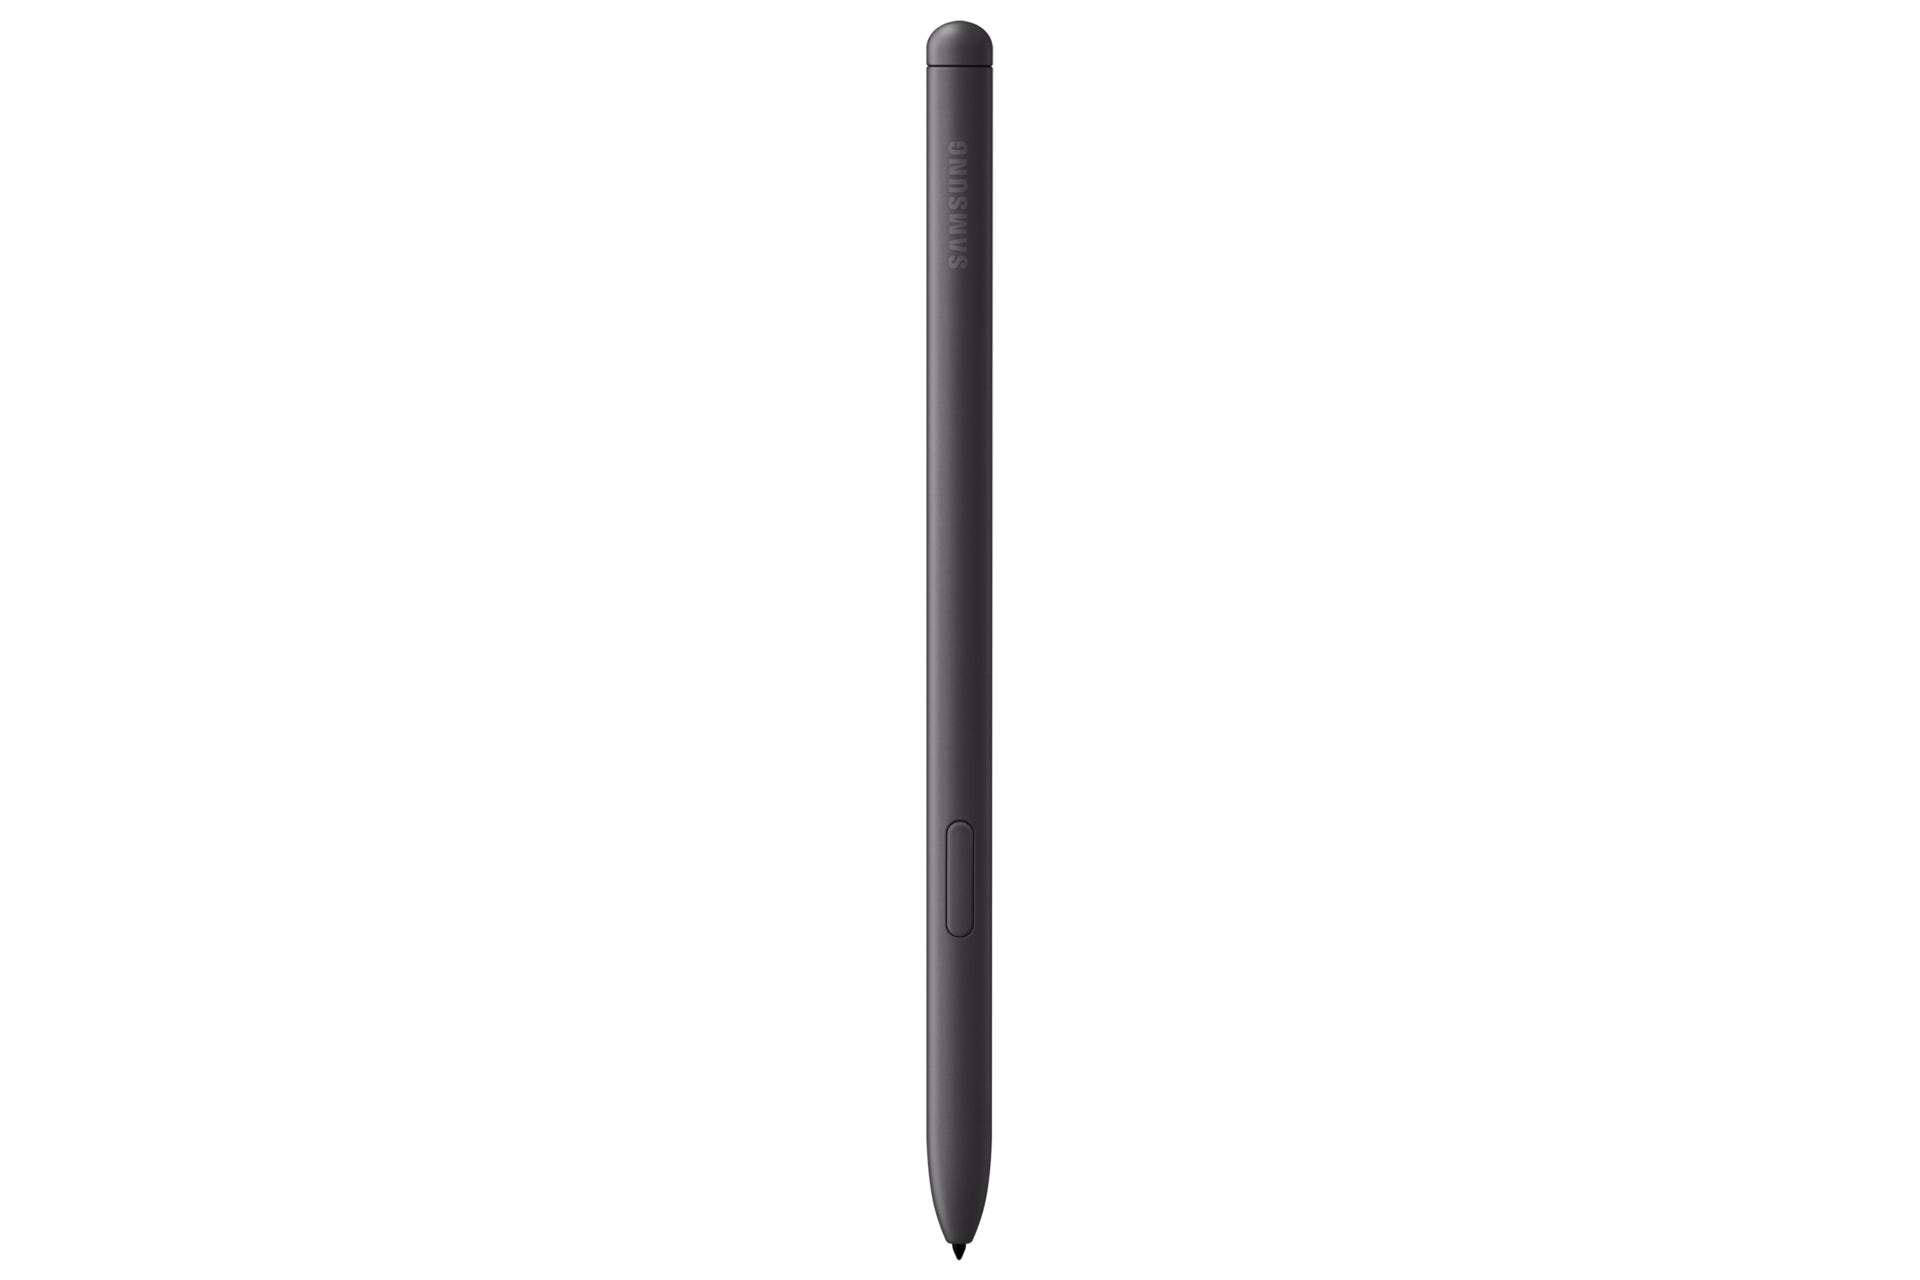 Tablet Samsung Galaxy Tab S6 Lite 10.4 Pulgada Con S Pen, Modelo Sm-P620, Color Gris Oxford, 4Gb Ram, 128Gb Rom, 5+8 Mp, Wi-Fi, Android, O/C, Vel. 2.3Ghz,1.7Ghz